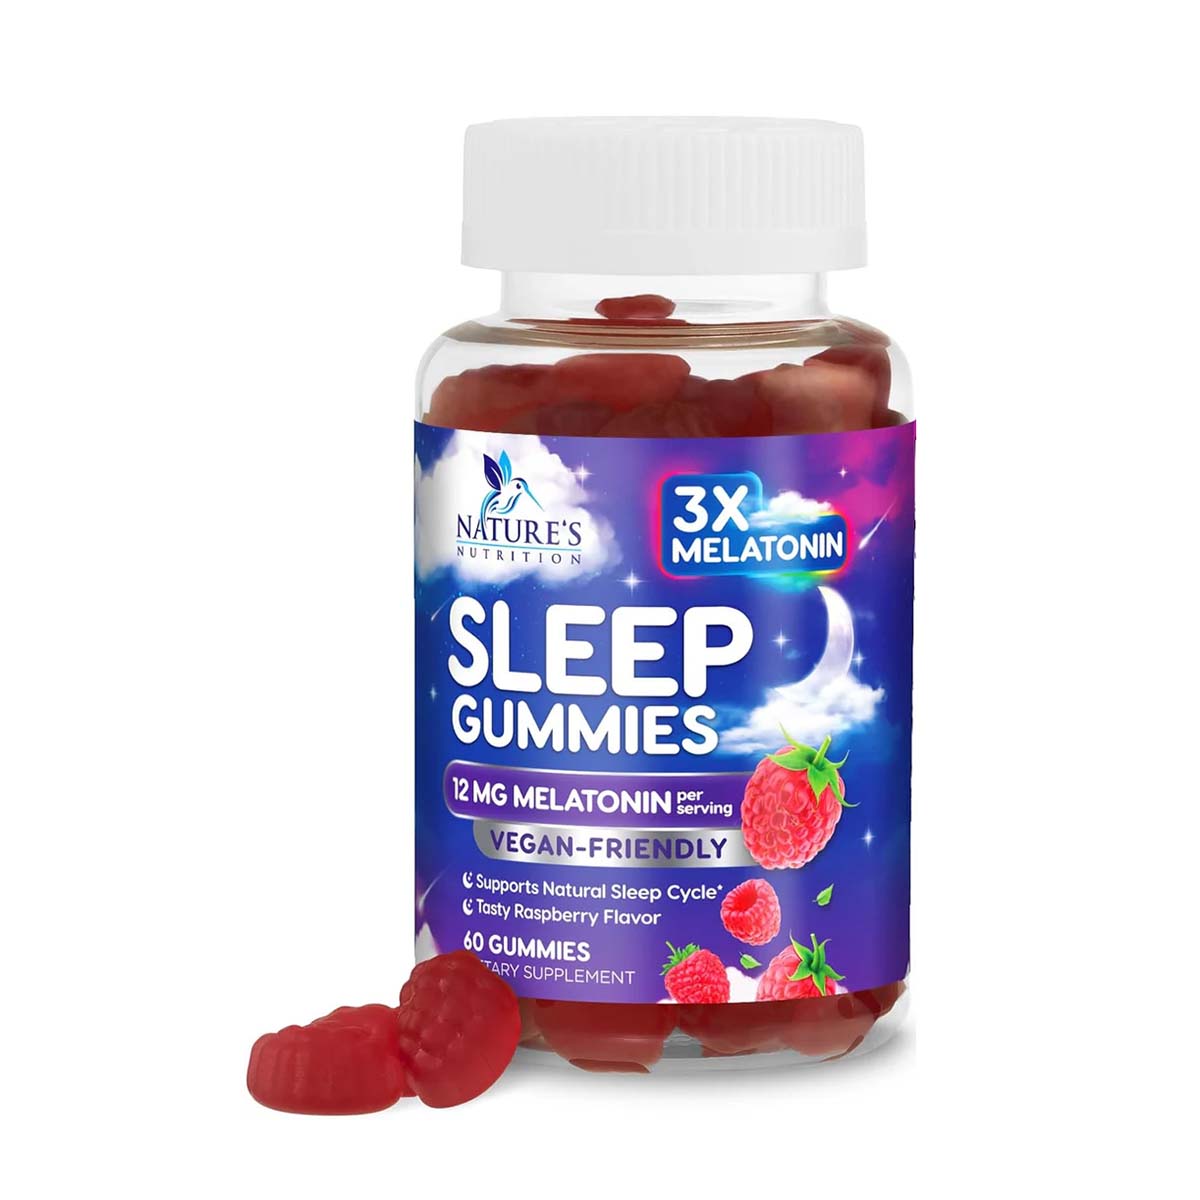 Nature's Nutrition Sleep gummies